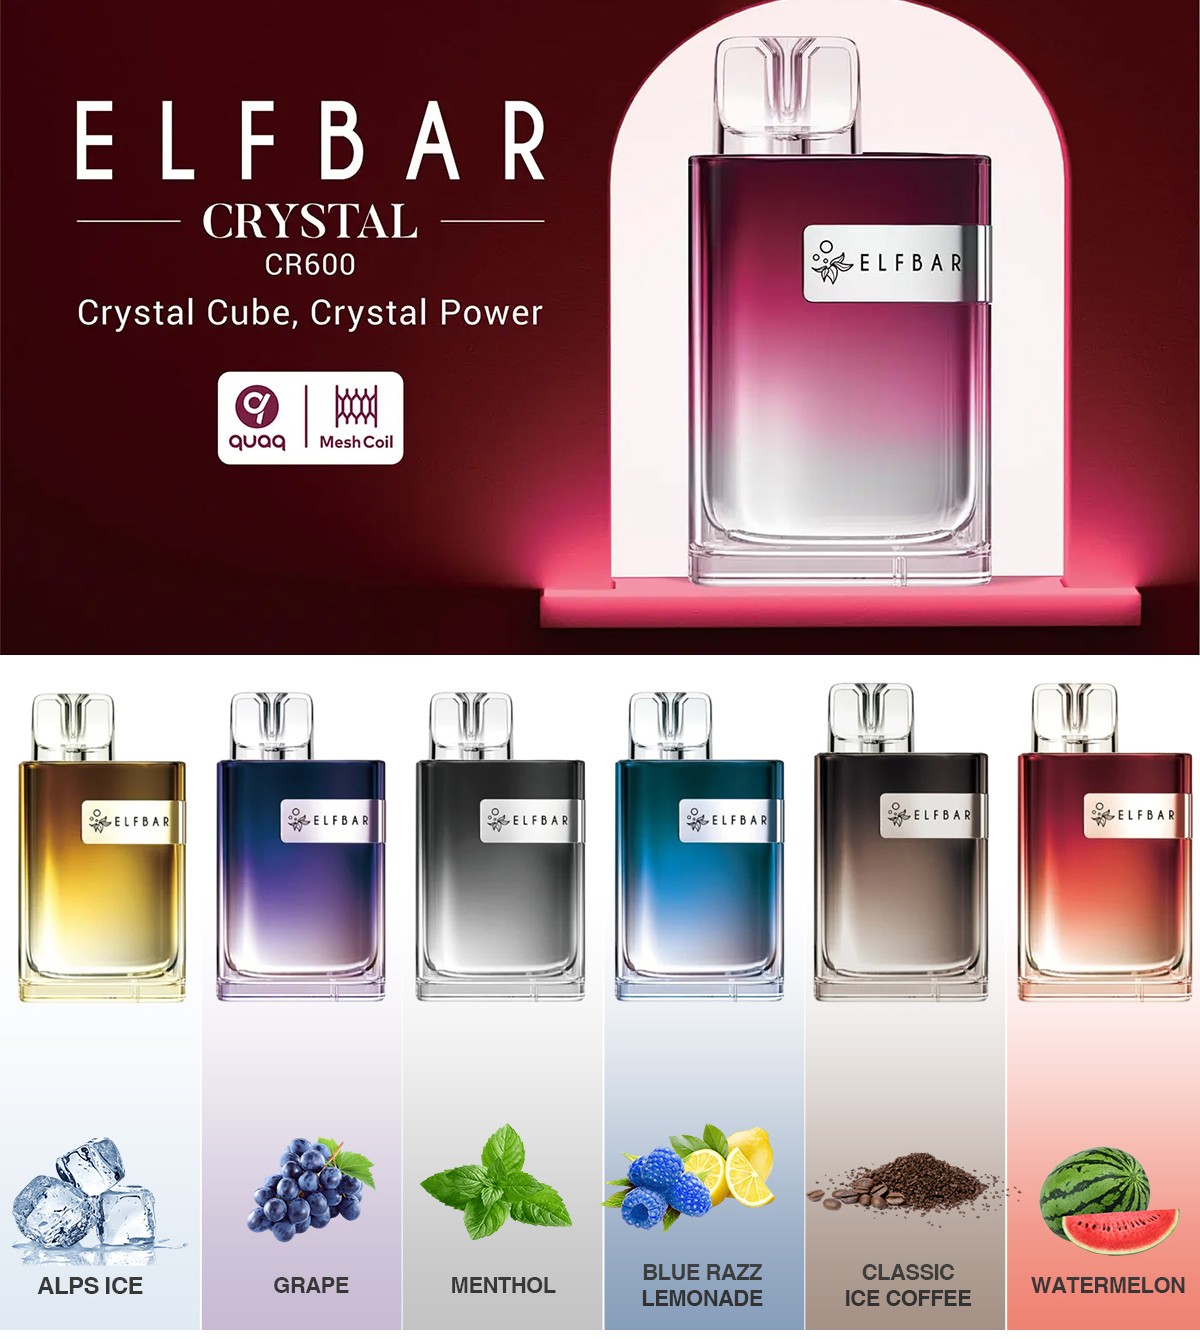 Elf Bar Crystal CR600